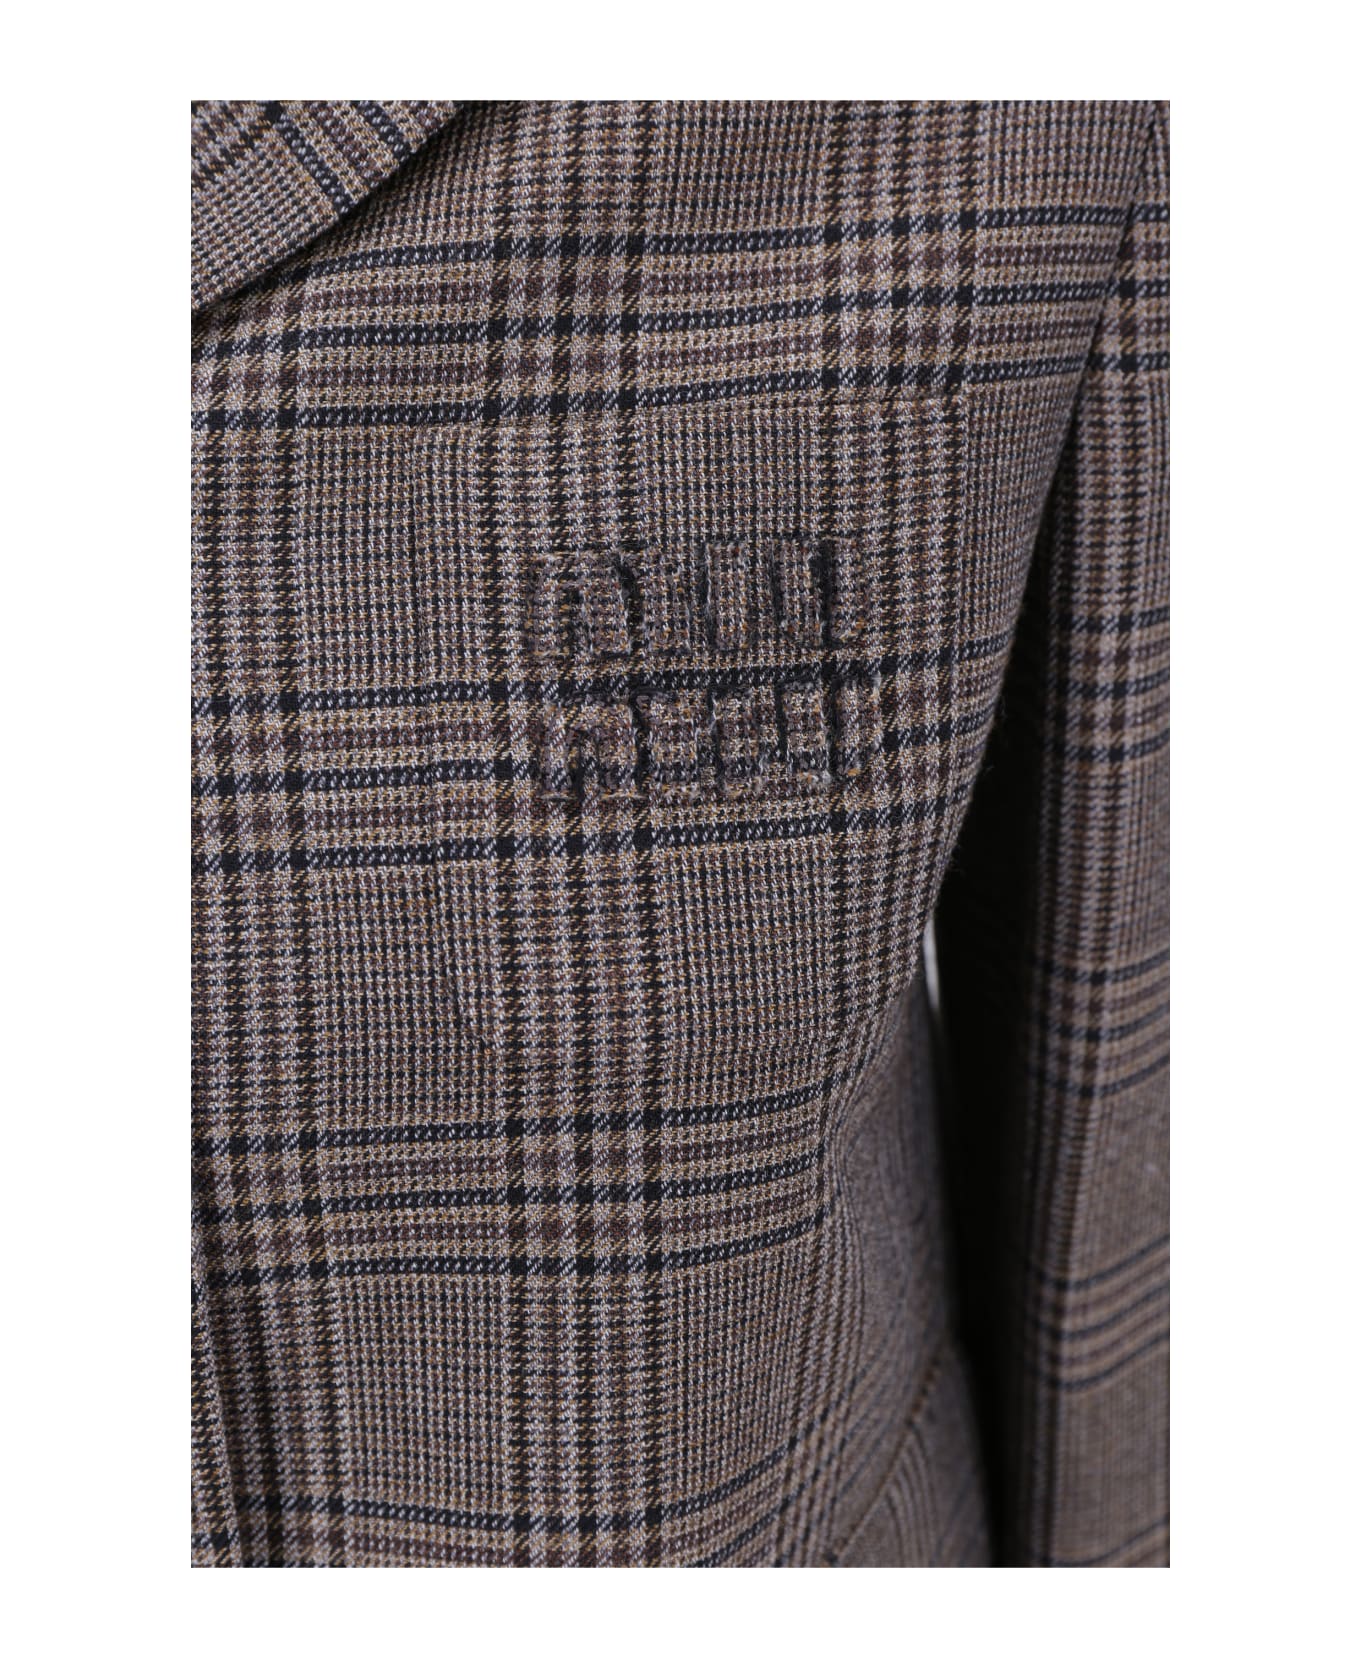 Miu Miu Check-pattern Wool Jacket - Corteccia